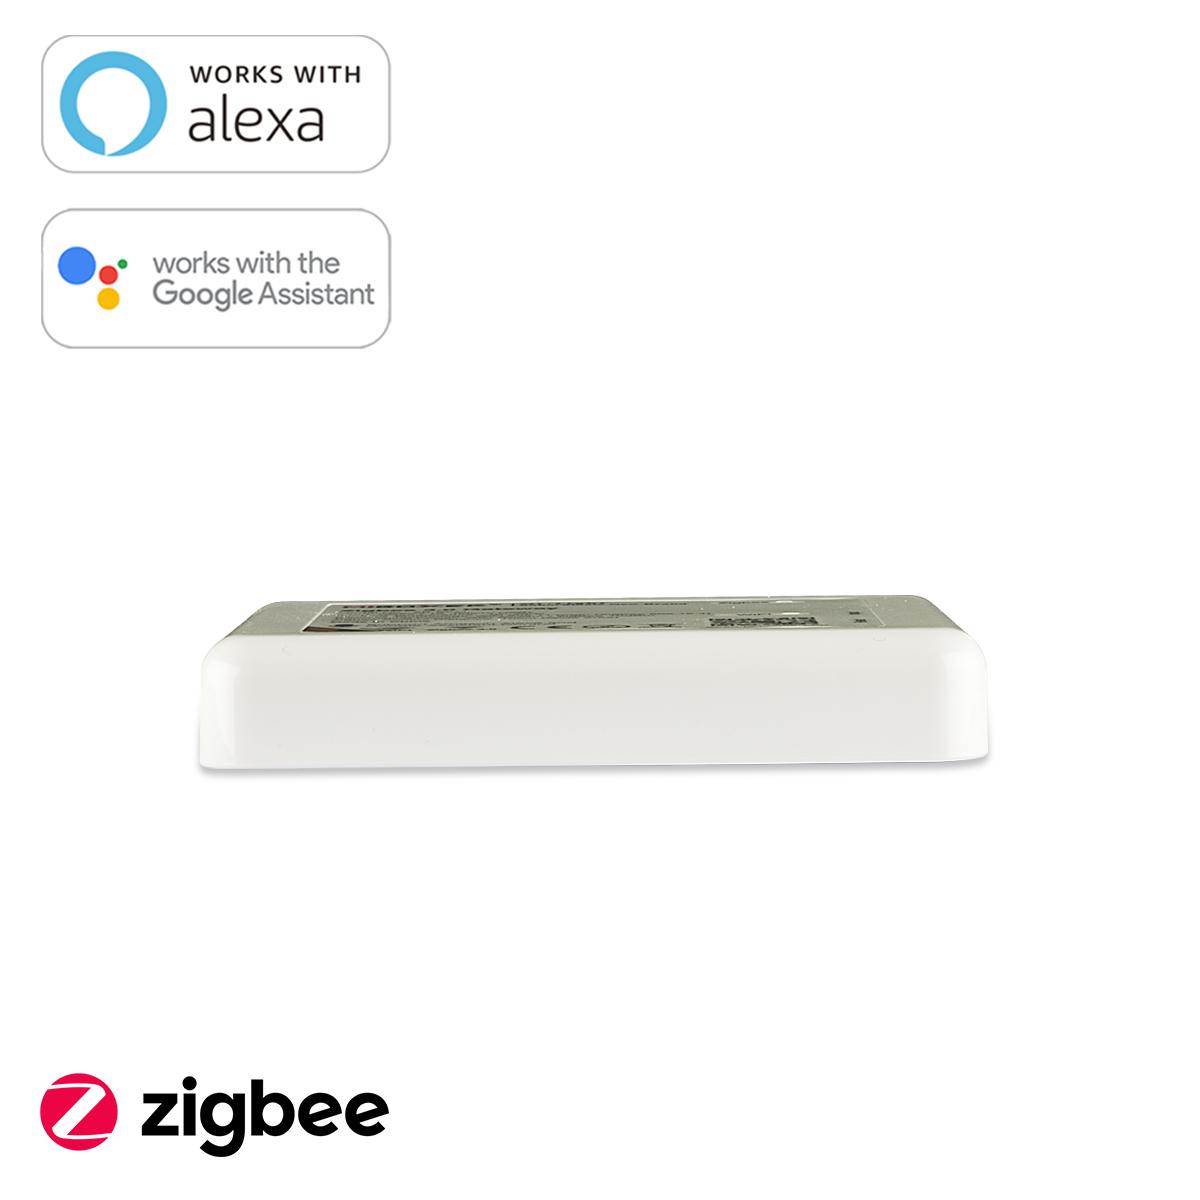 MiBoxer Zigbee 3.0 Wireless Gateway / Hub / Bridge ZBBOX1